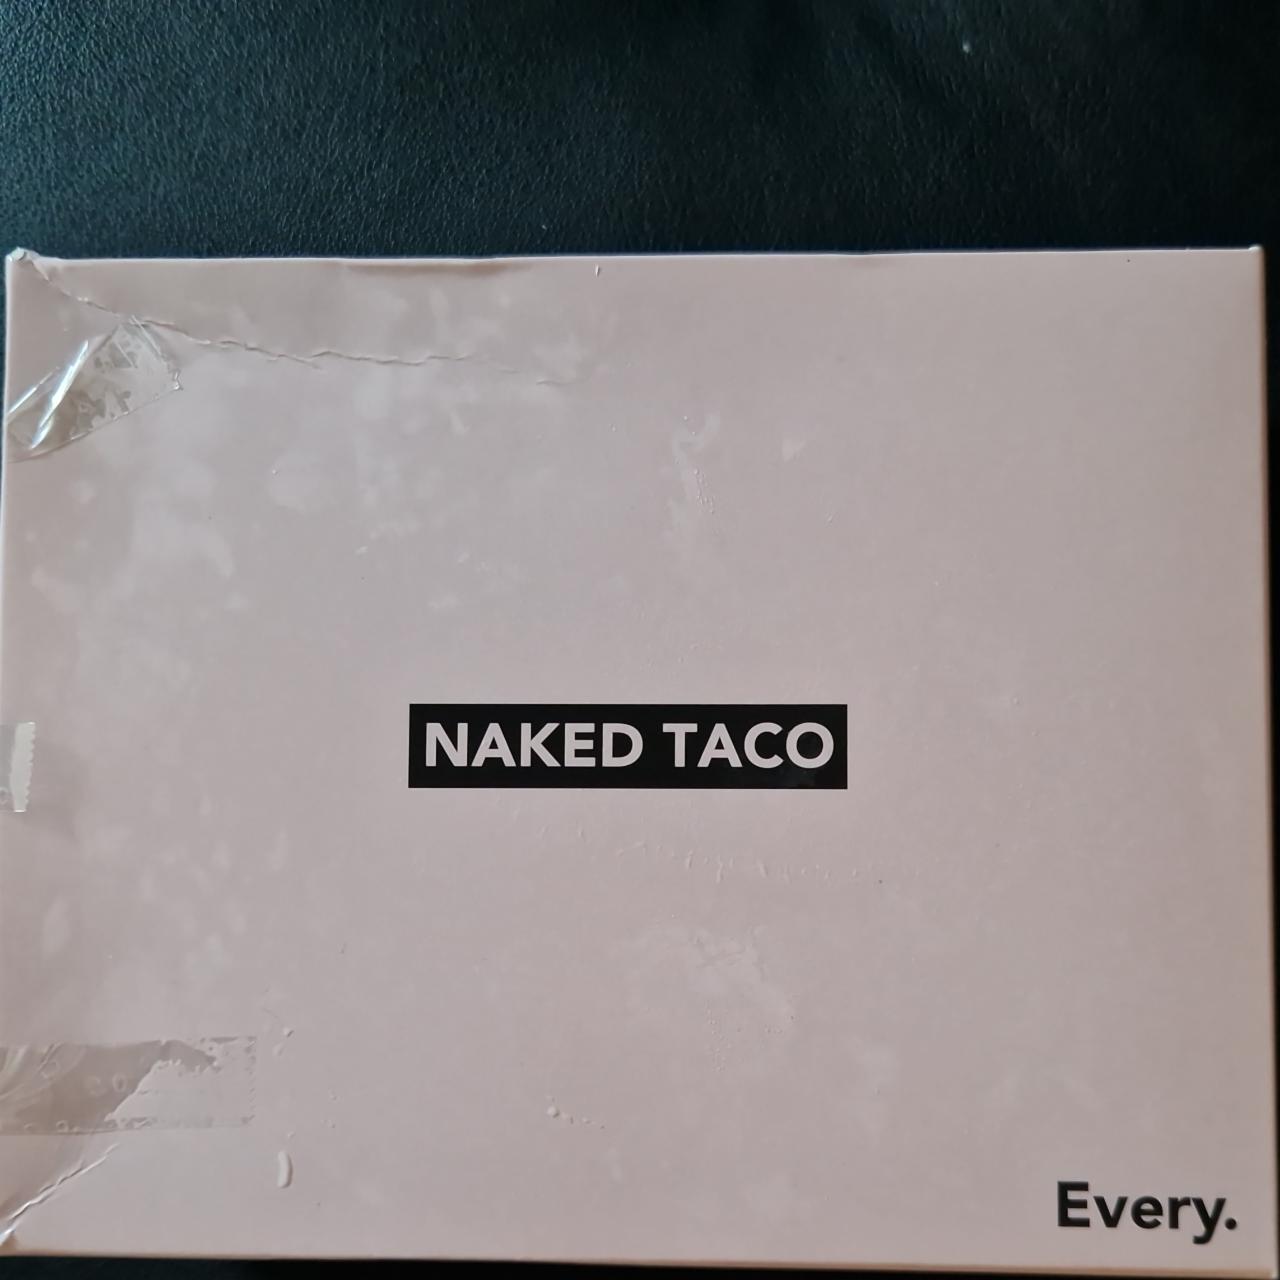 Fotografie - Naked taco Every.